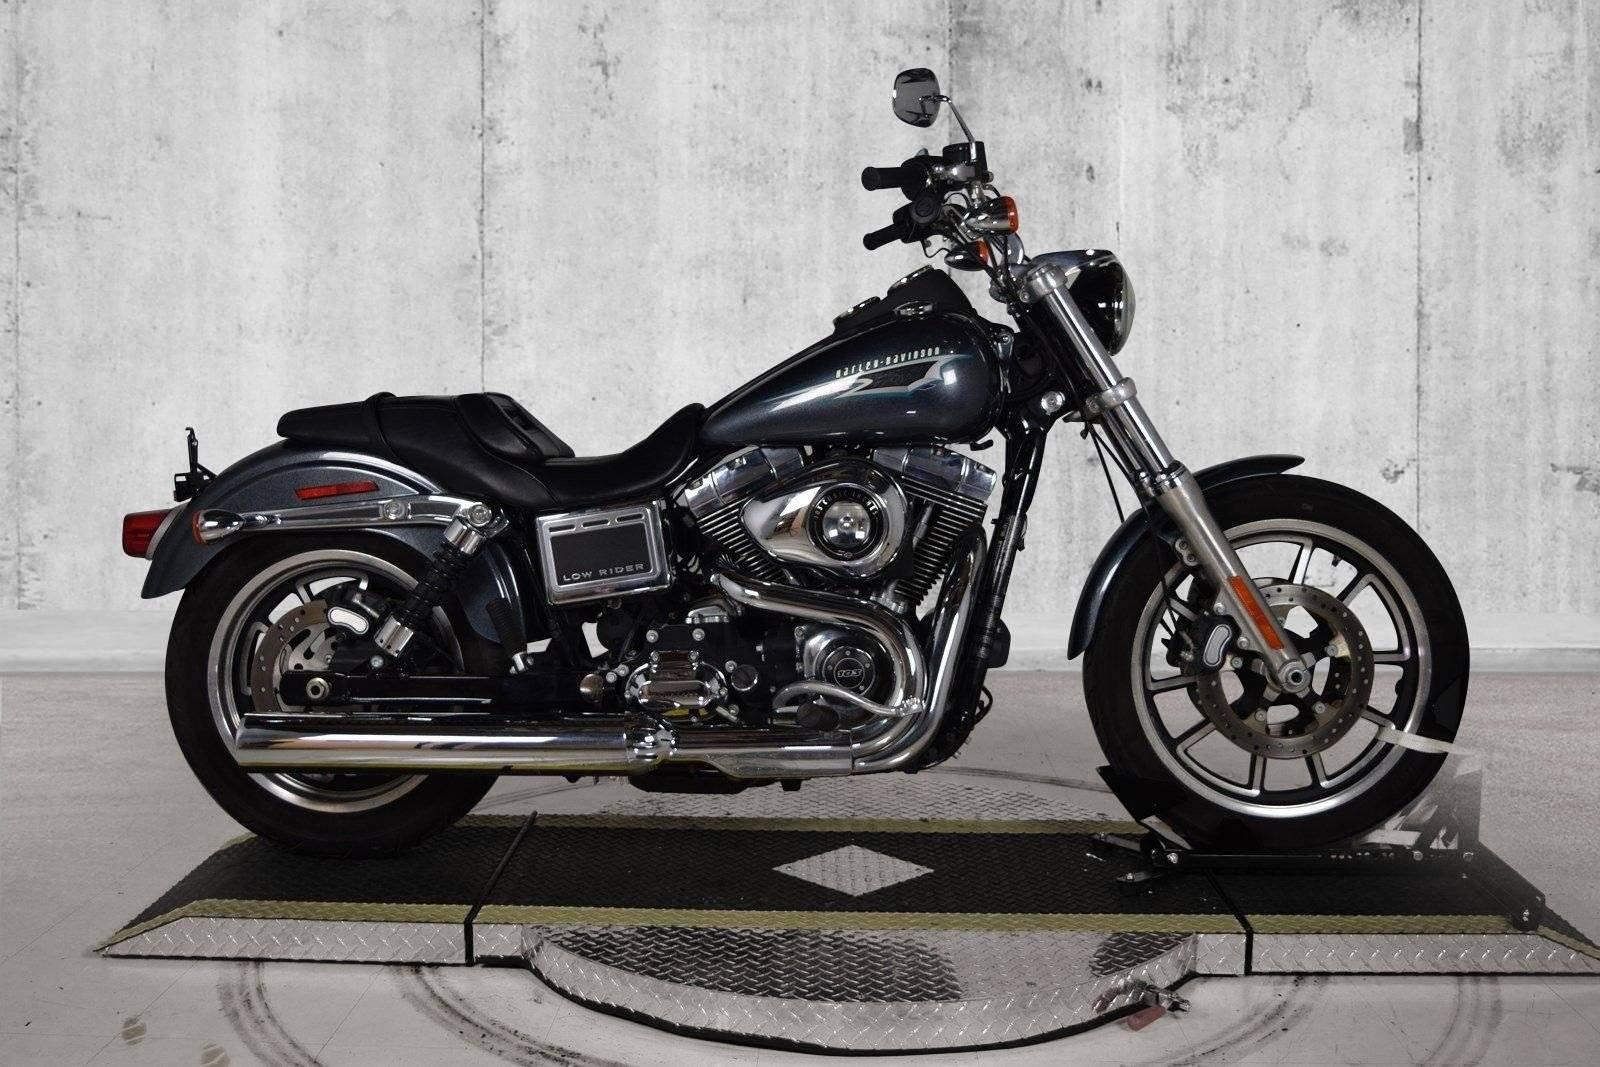 Harley Davidson Dyna Motorcycle: A Vaporizer Guide at DopeBoo.com